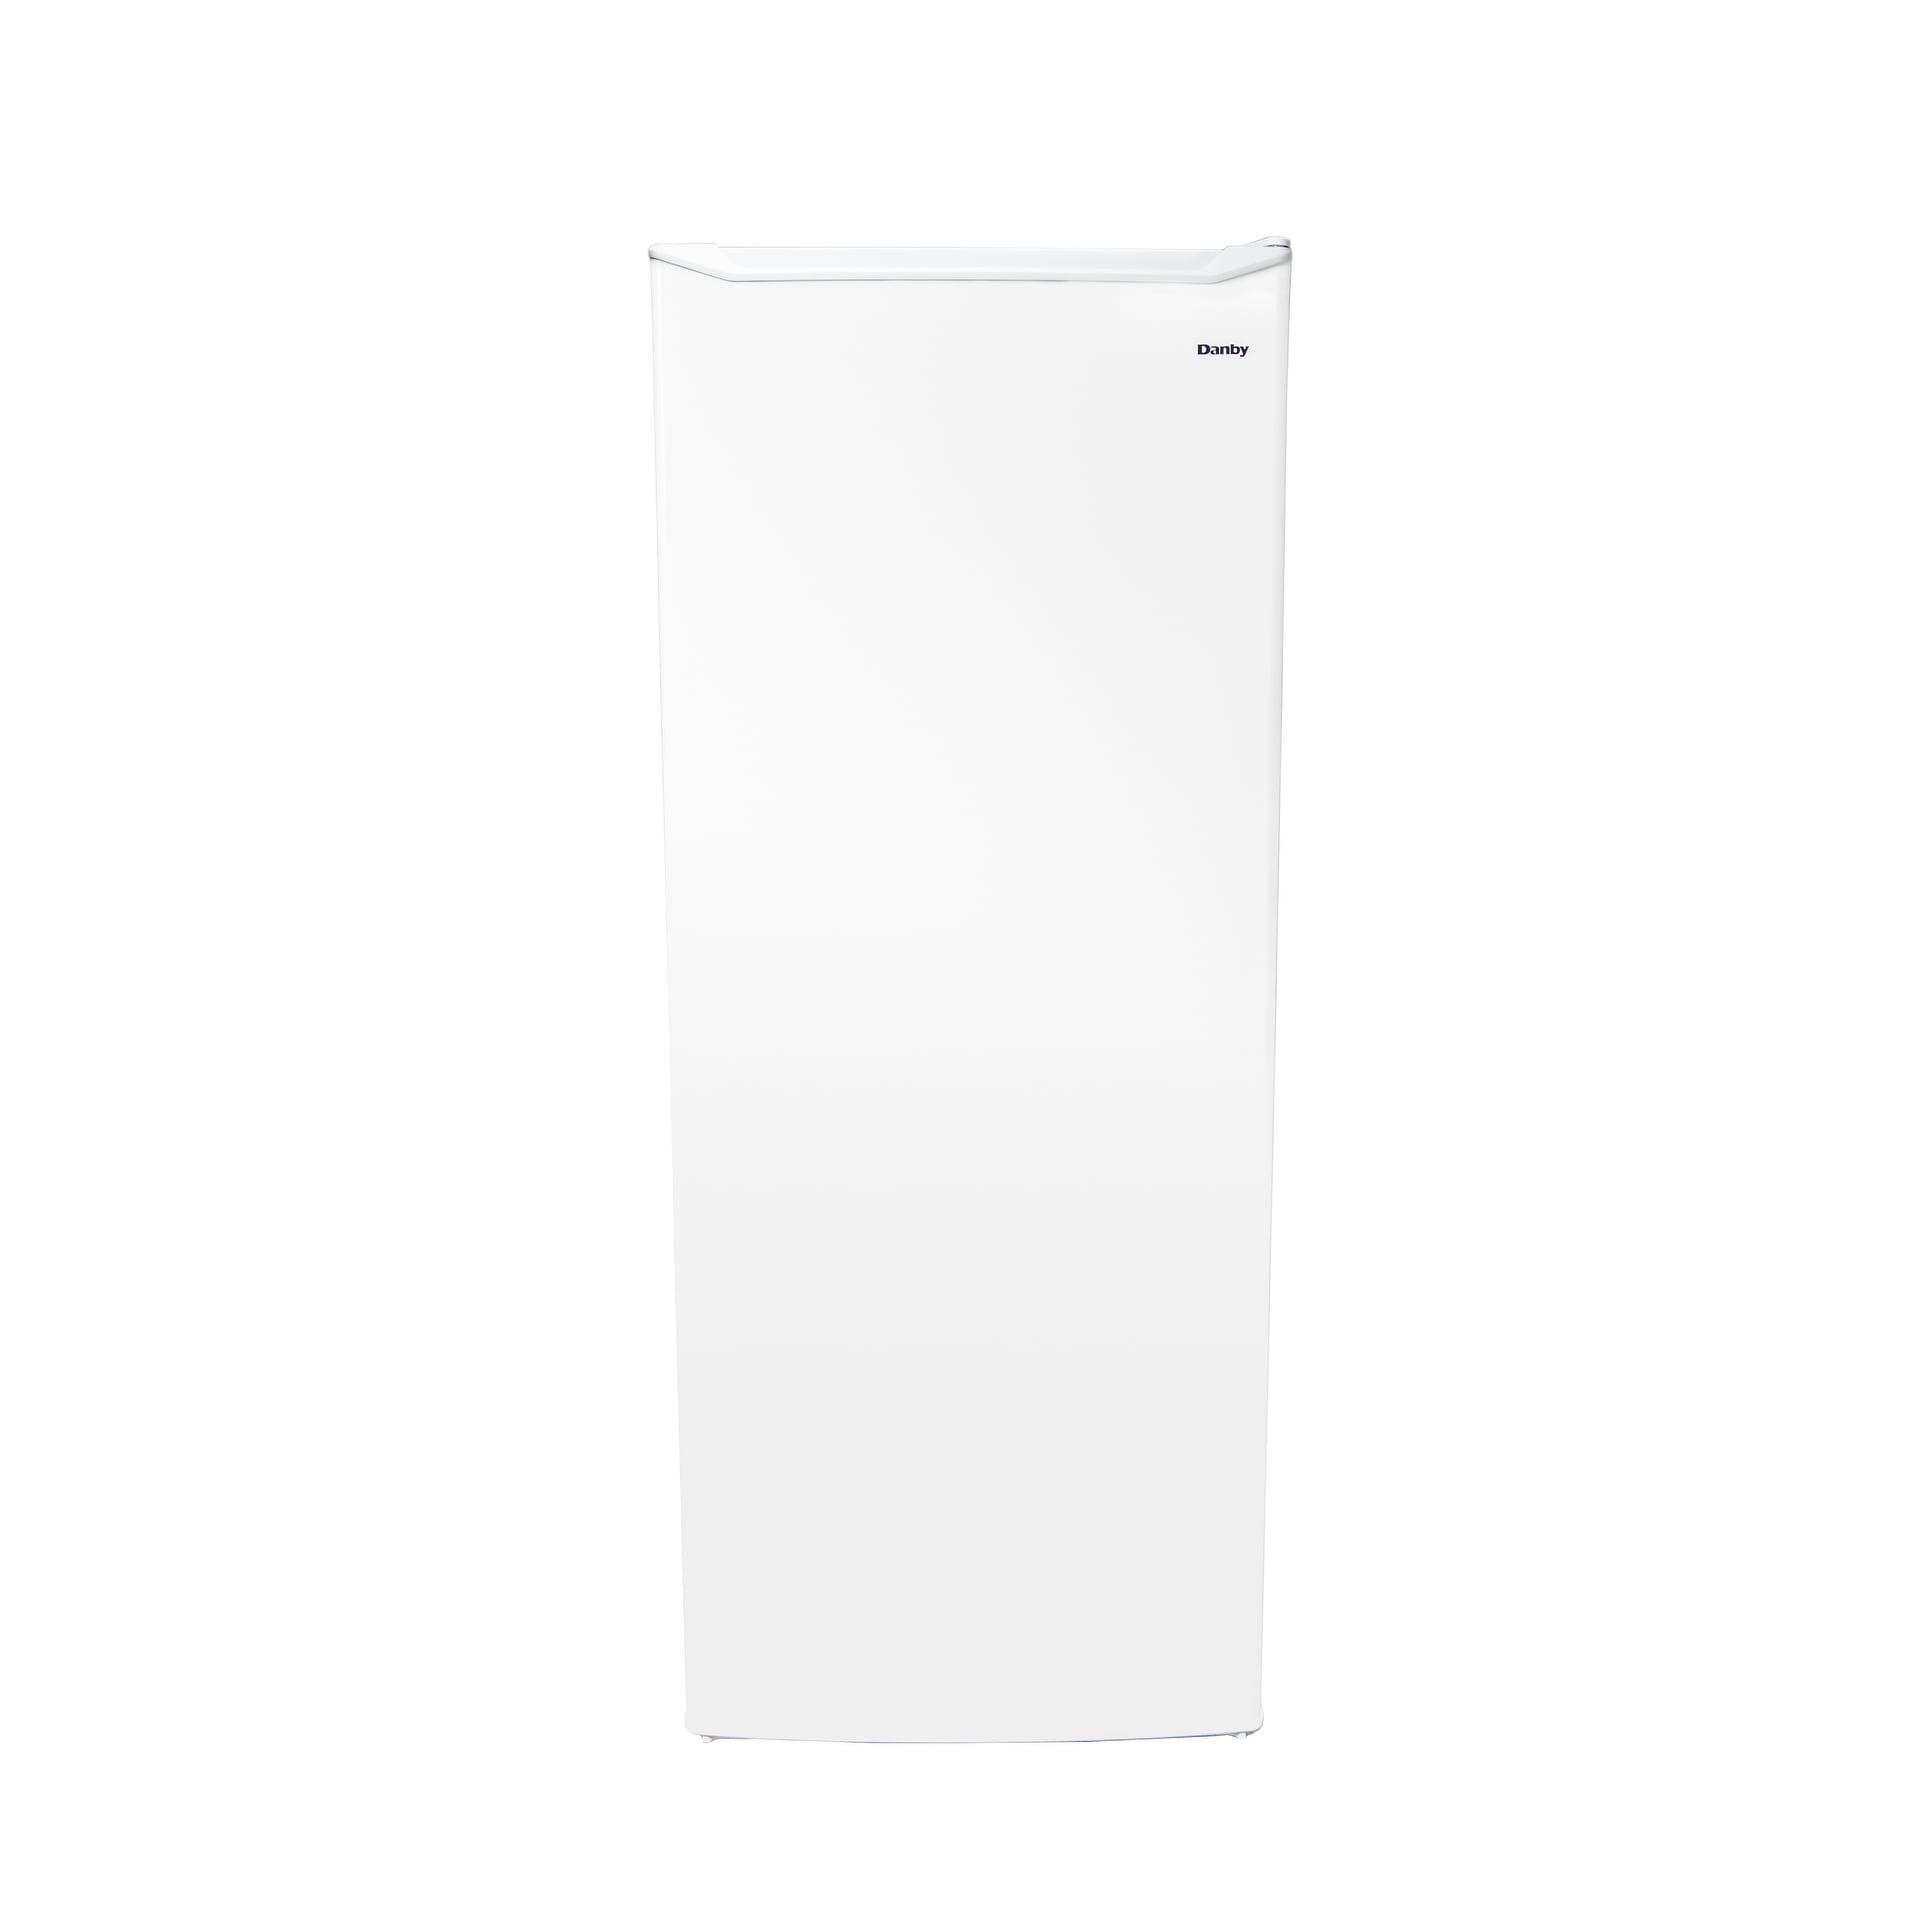 Danby 6.0 cu. ft. Upright Freezer in White - DUFM060B1WDB